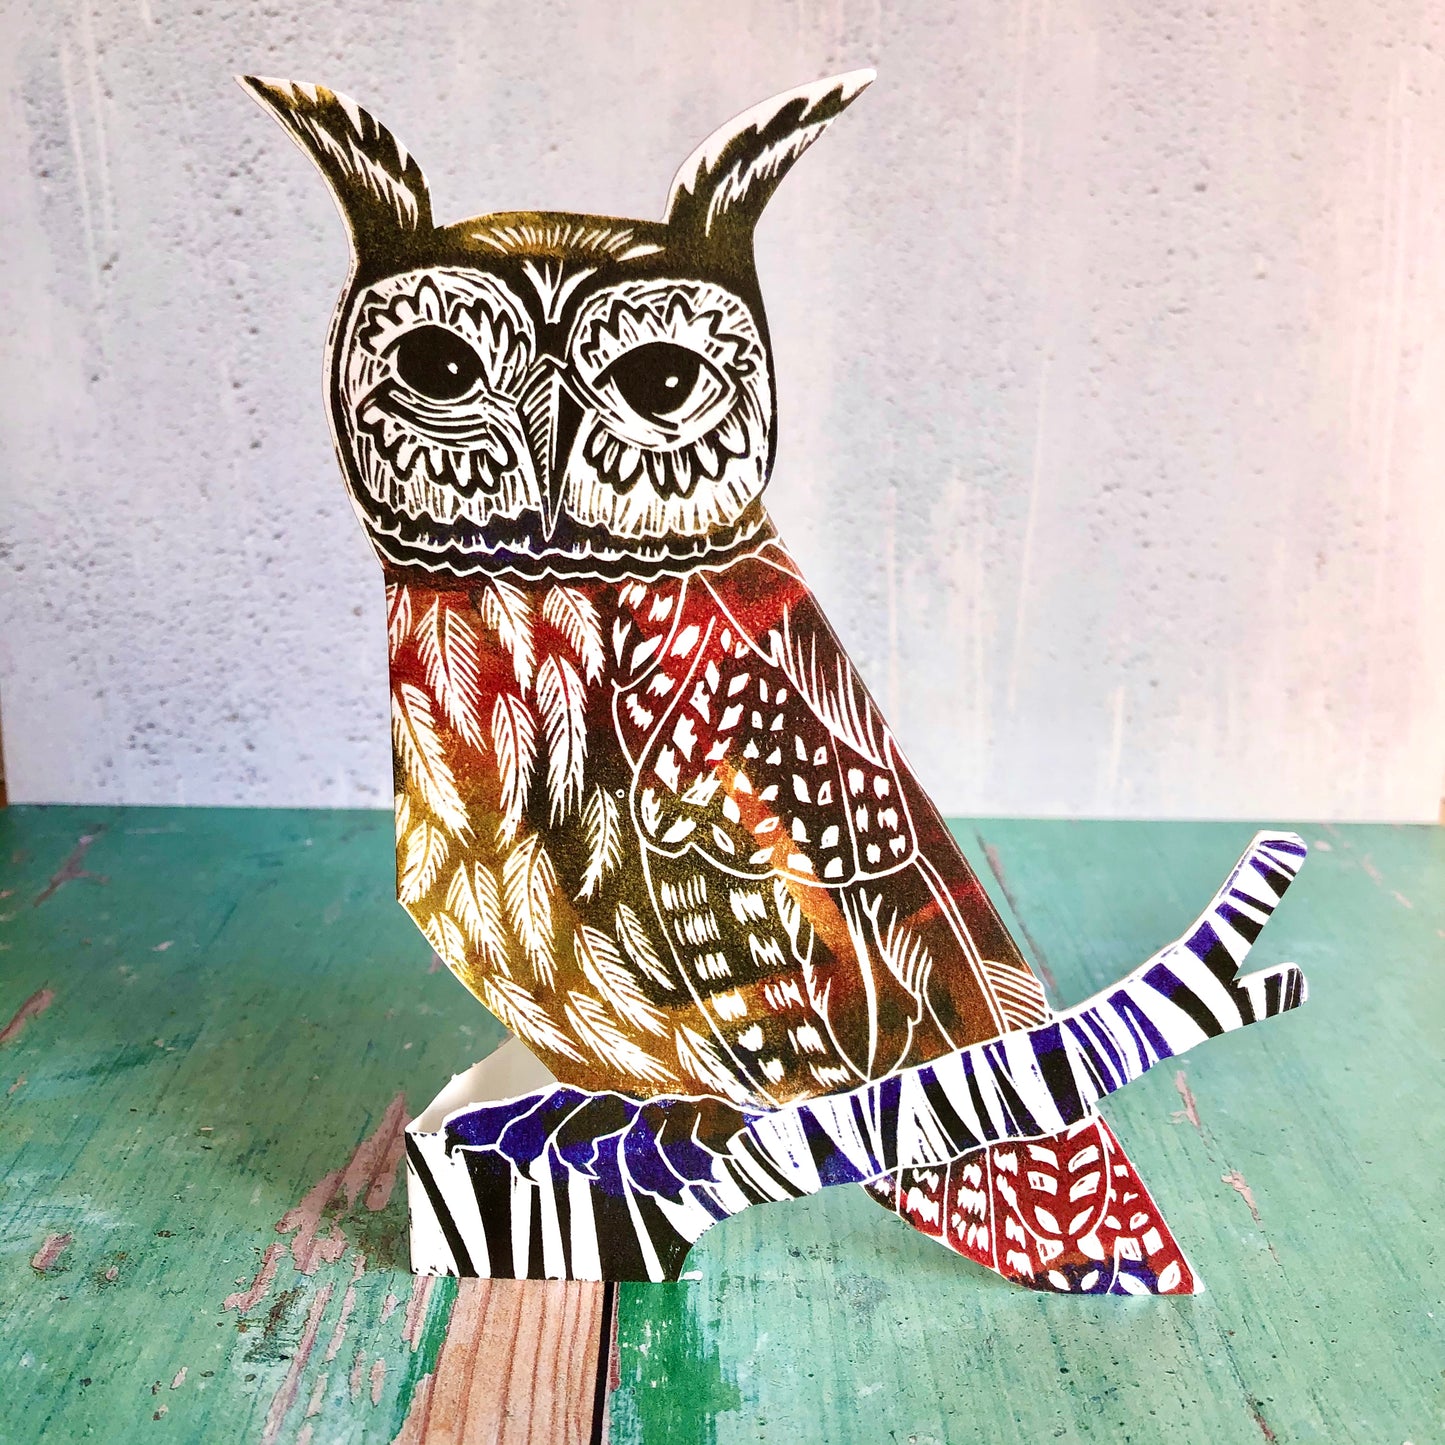 3D Owl by Printmaker Judy Lumley